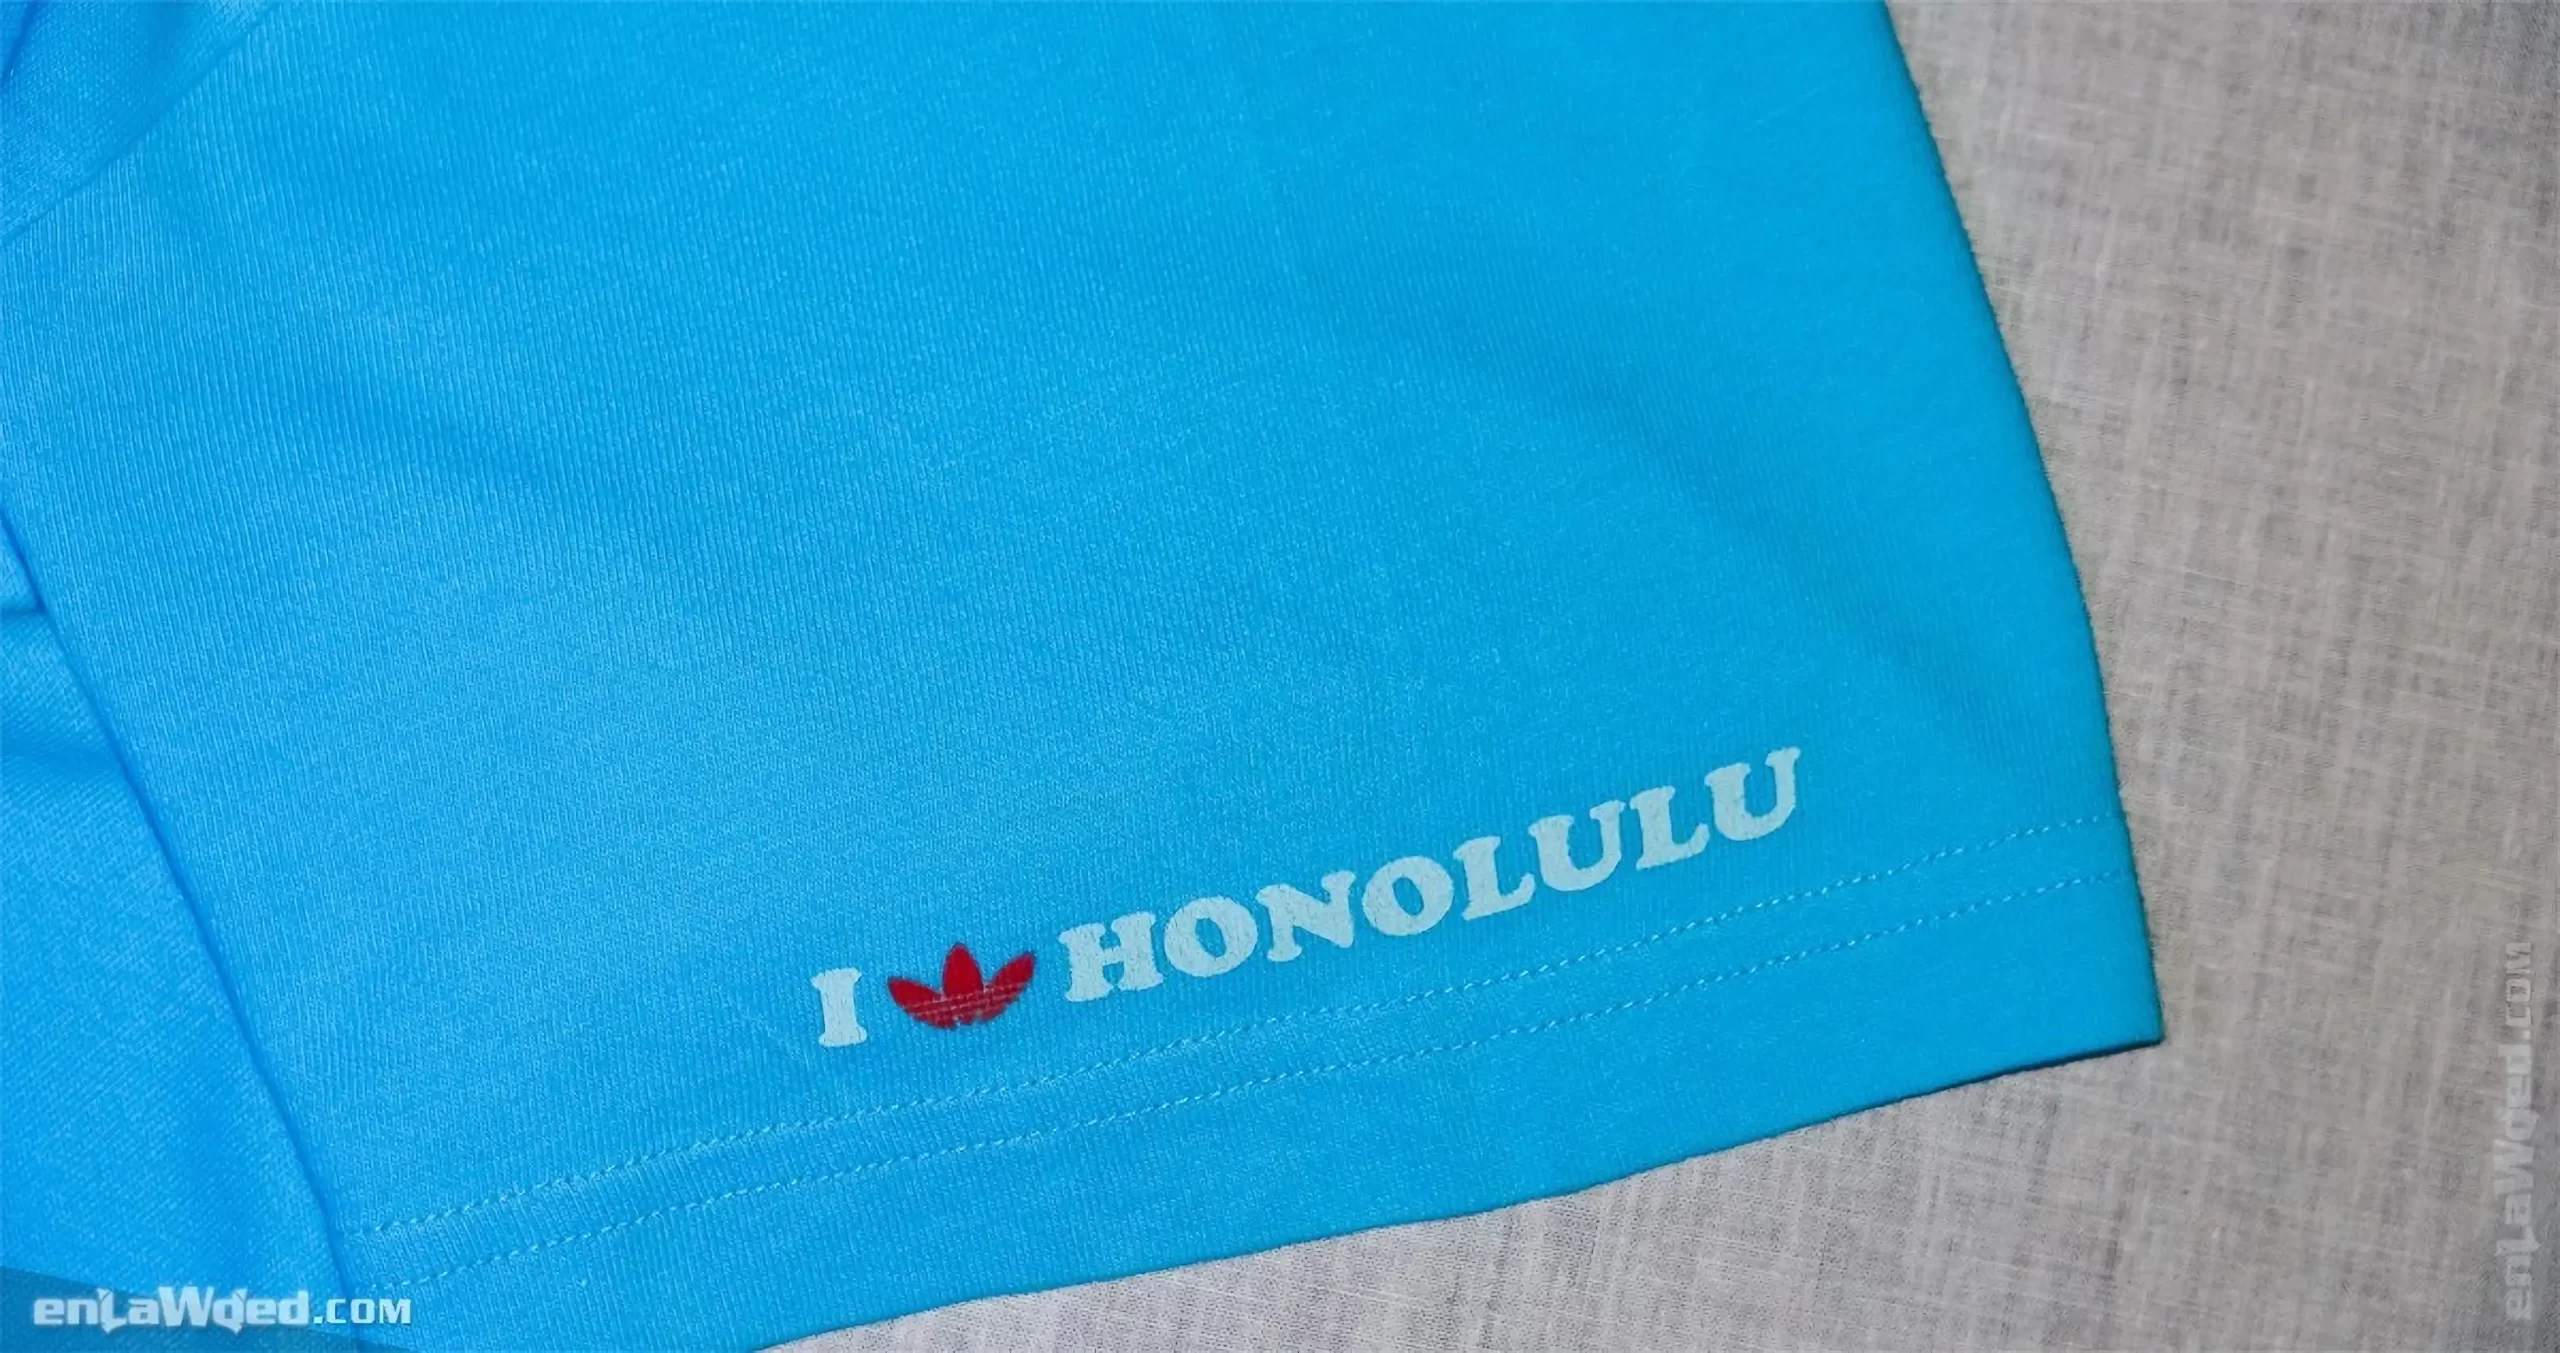 Men’s 2007 Honolulu Hawaï TS by Adidas Originals: Eager (EnLawded.com file #lmc5uu7md99dleqo78i)